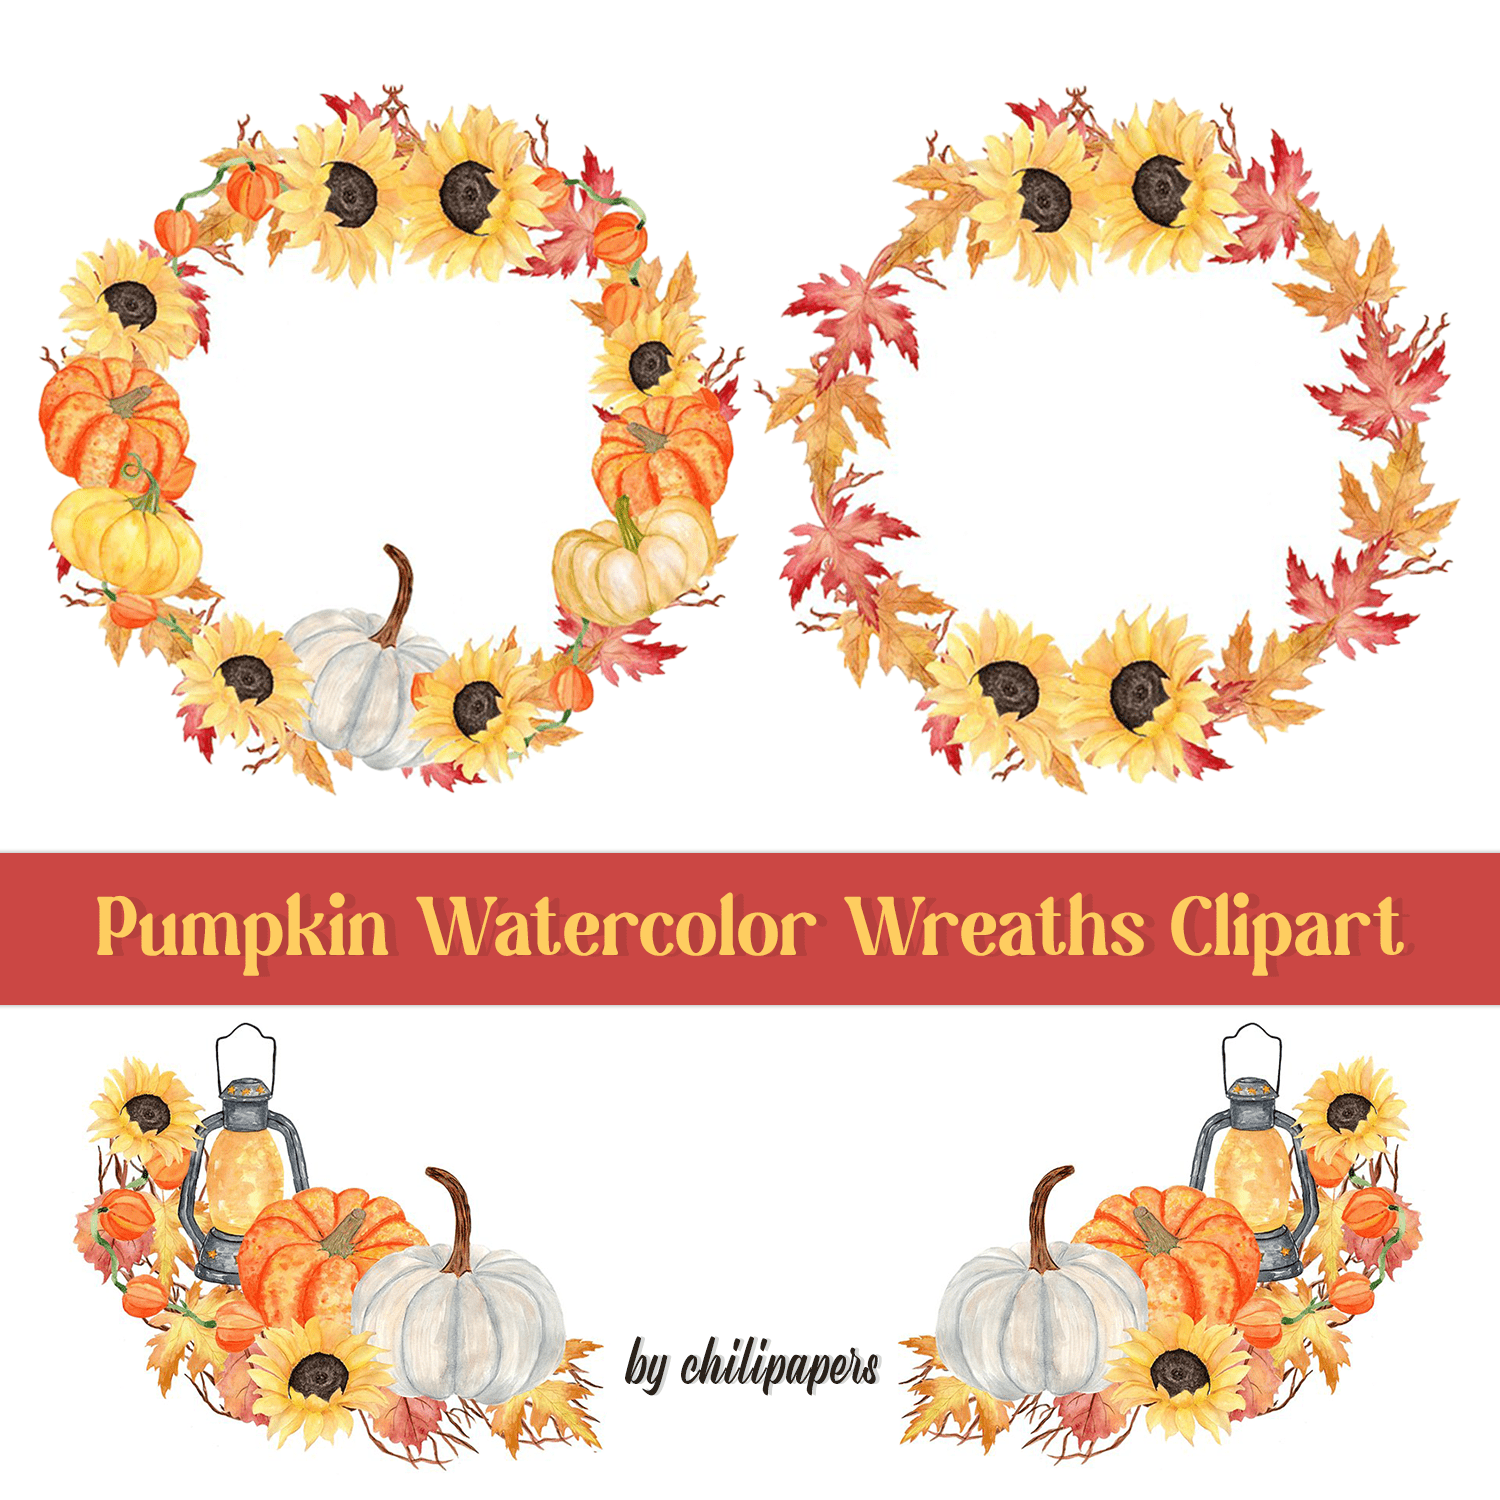 Pumpkin Watercolor Wreaths Clipart cover.